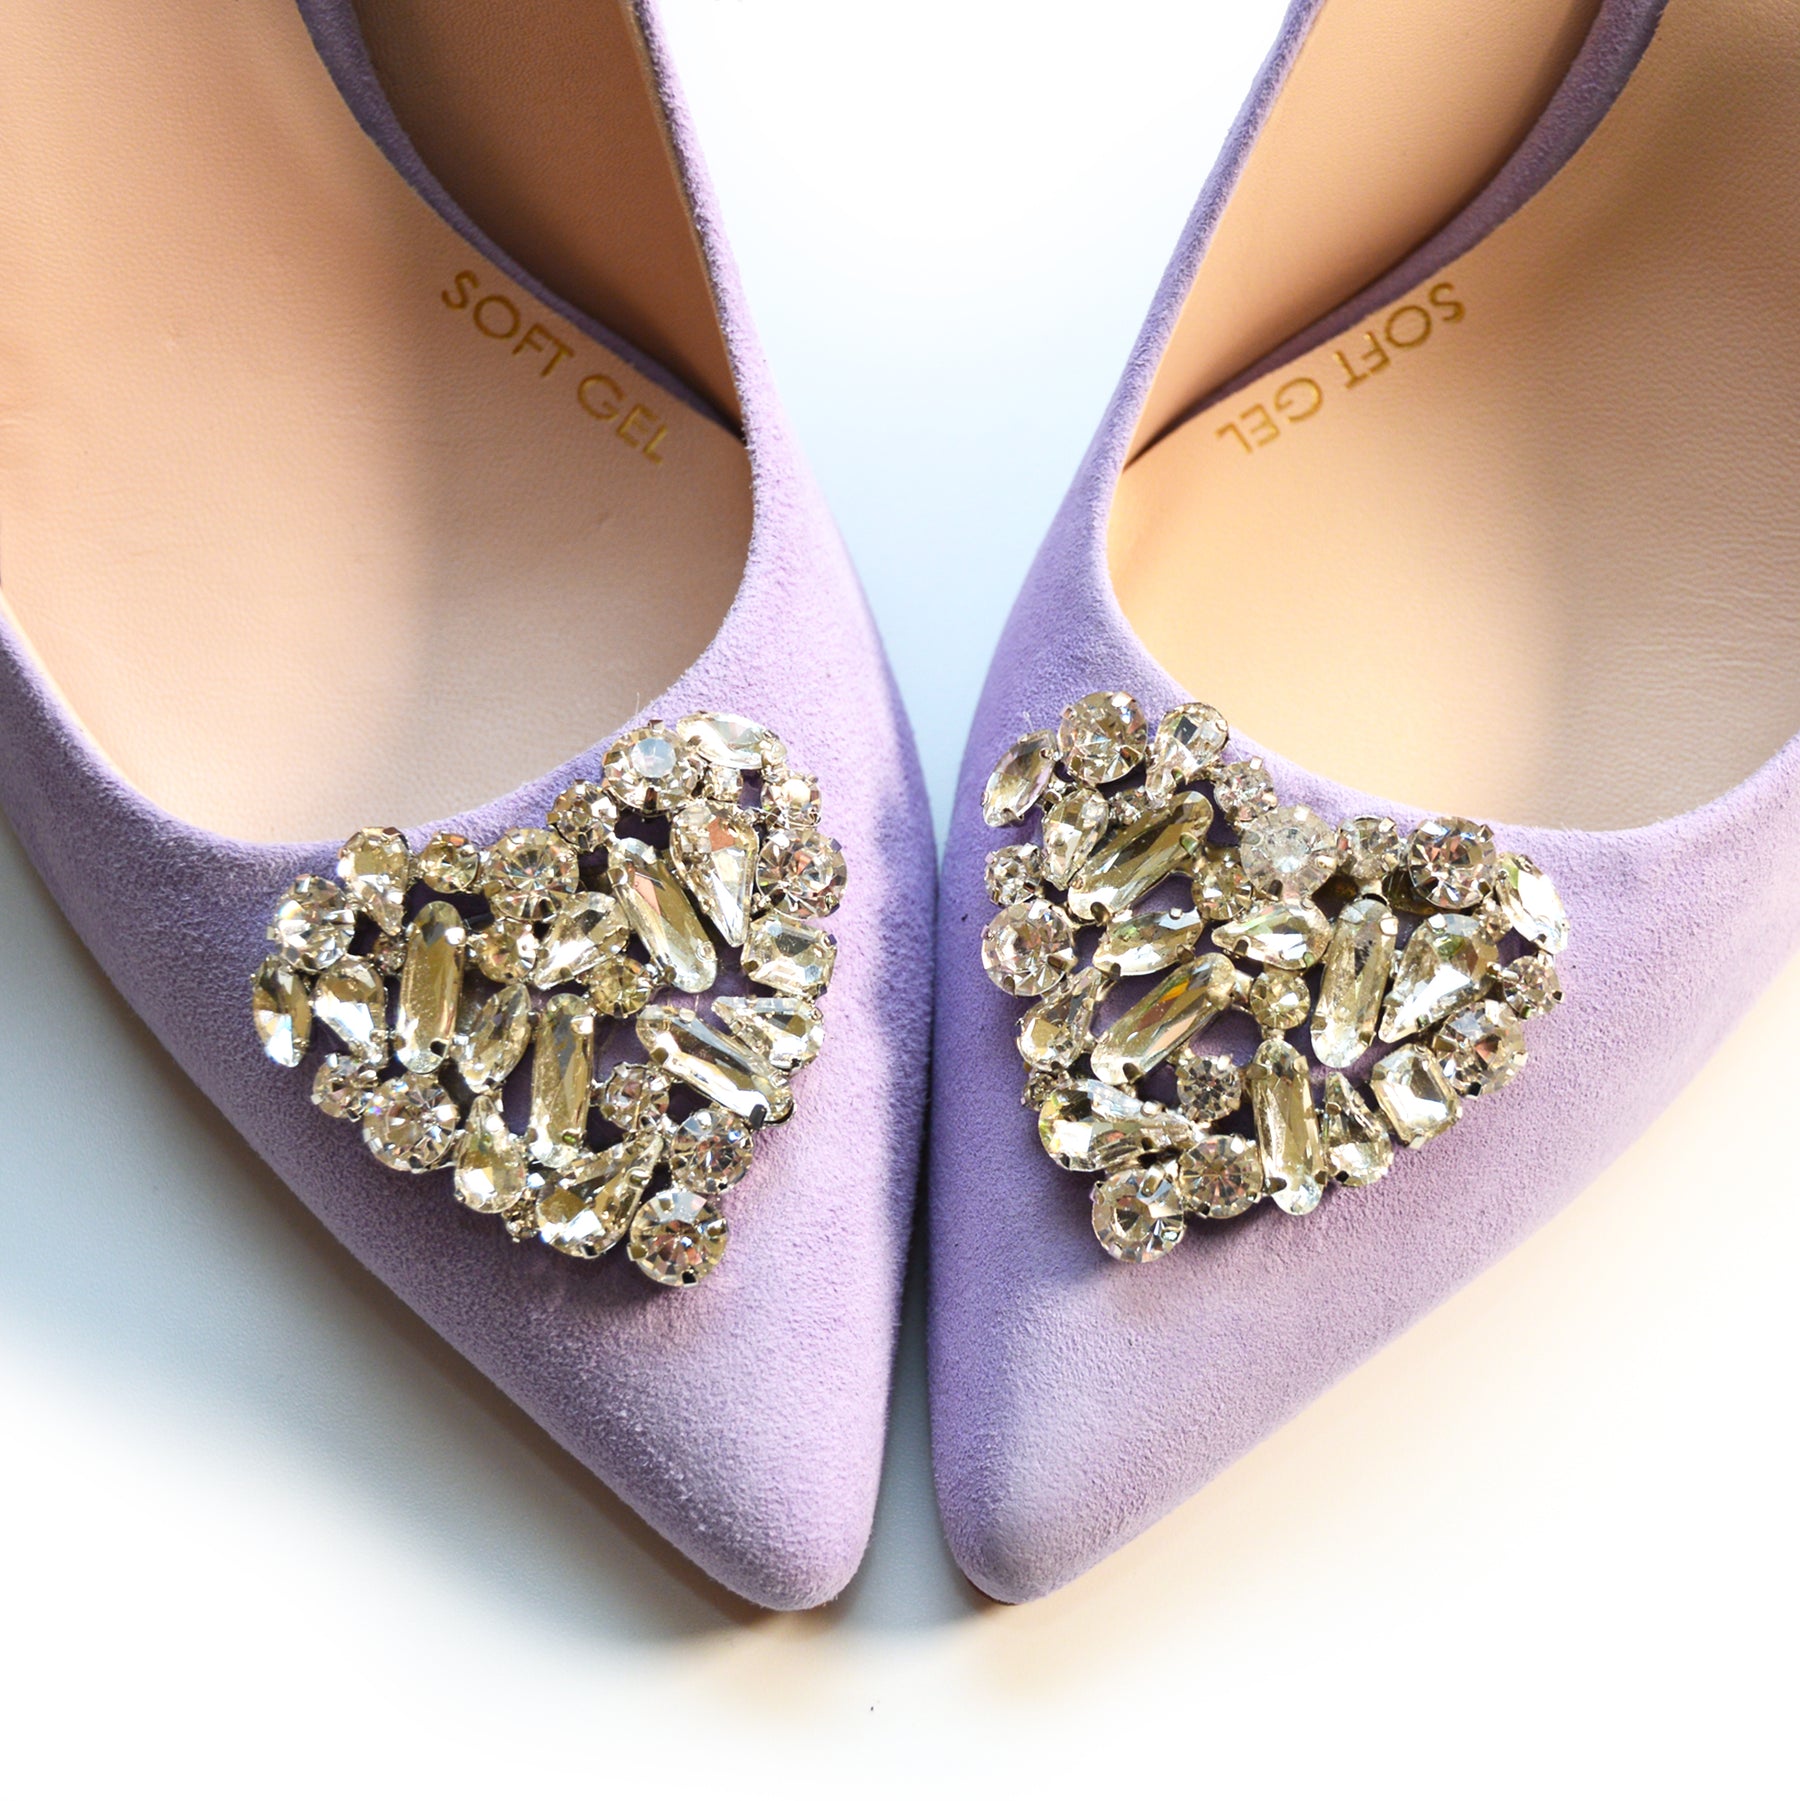 Violetta heels